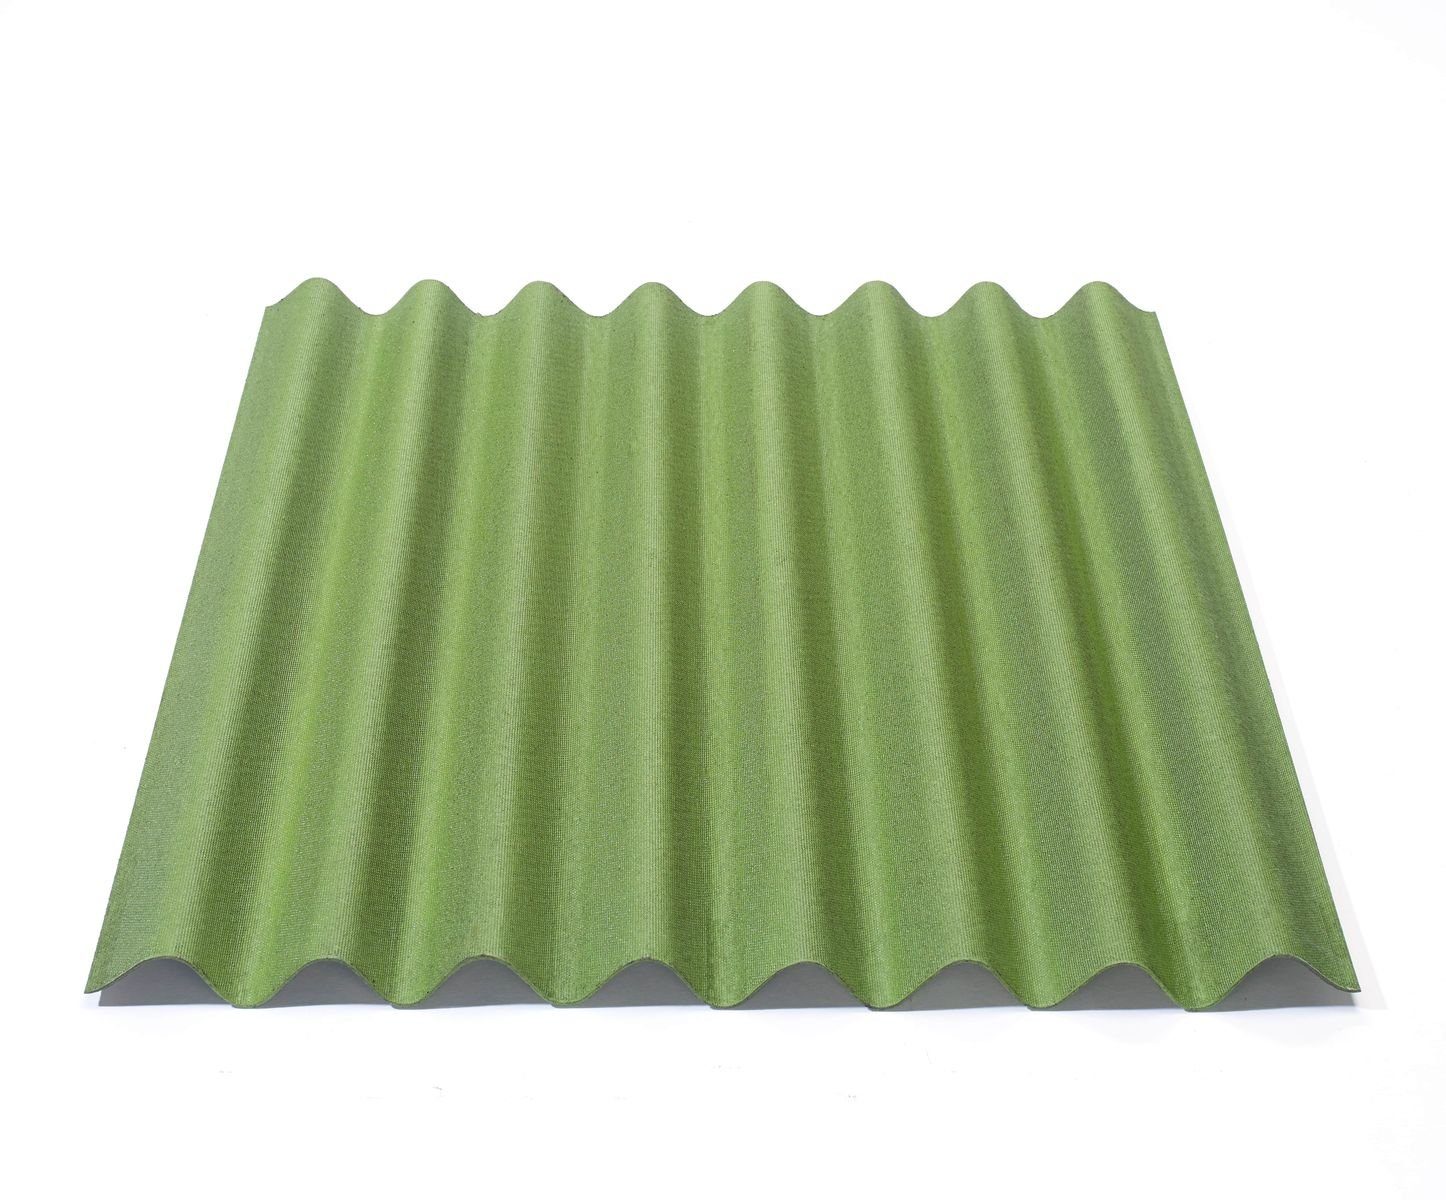 Onduline Dachpappe Onduline Easyline Dachplatte Wandplatte Bitumenwellplatten Wellplatte 1x0,76m - grün, wellig, 0.76 m² pro Paket, (1-St)